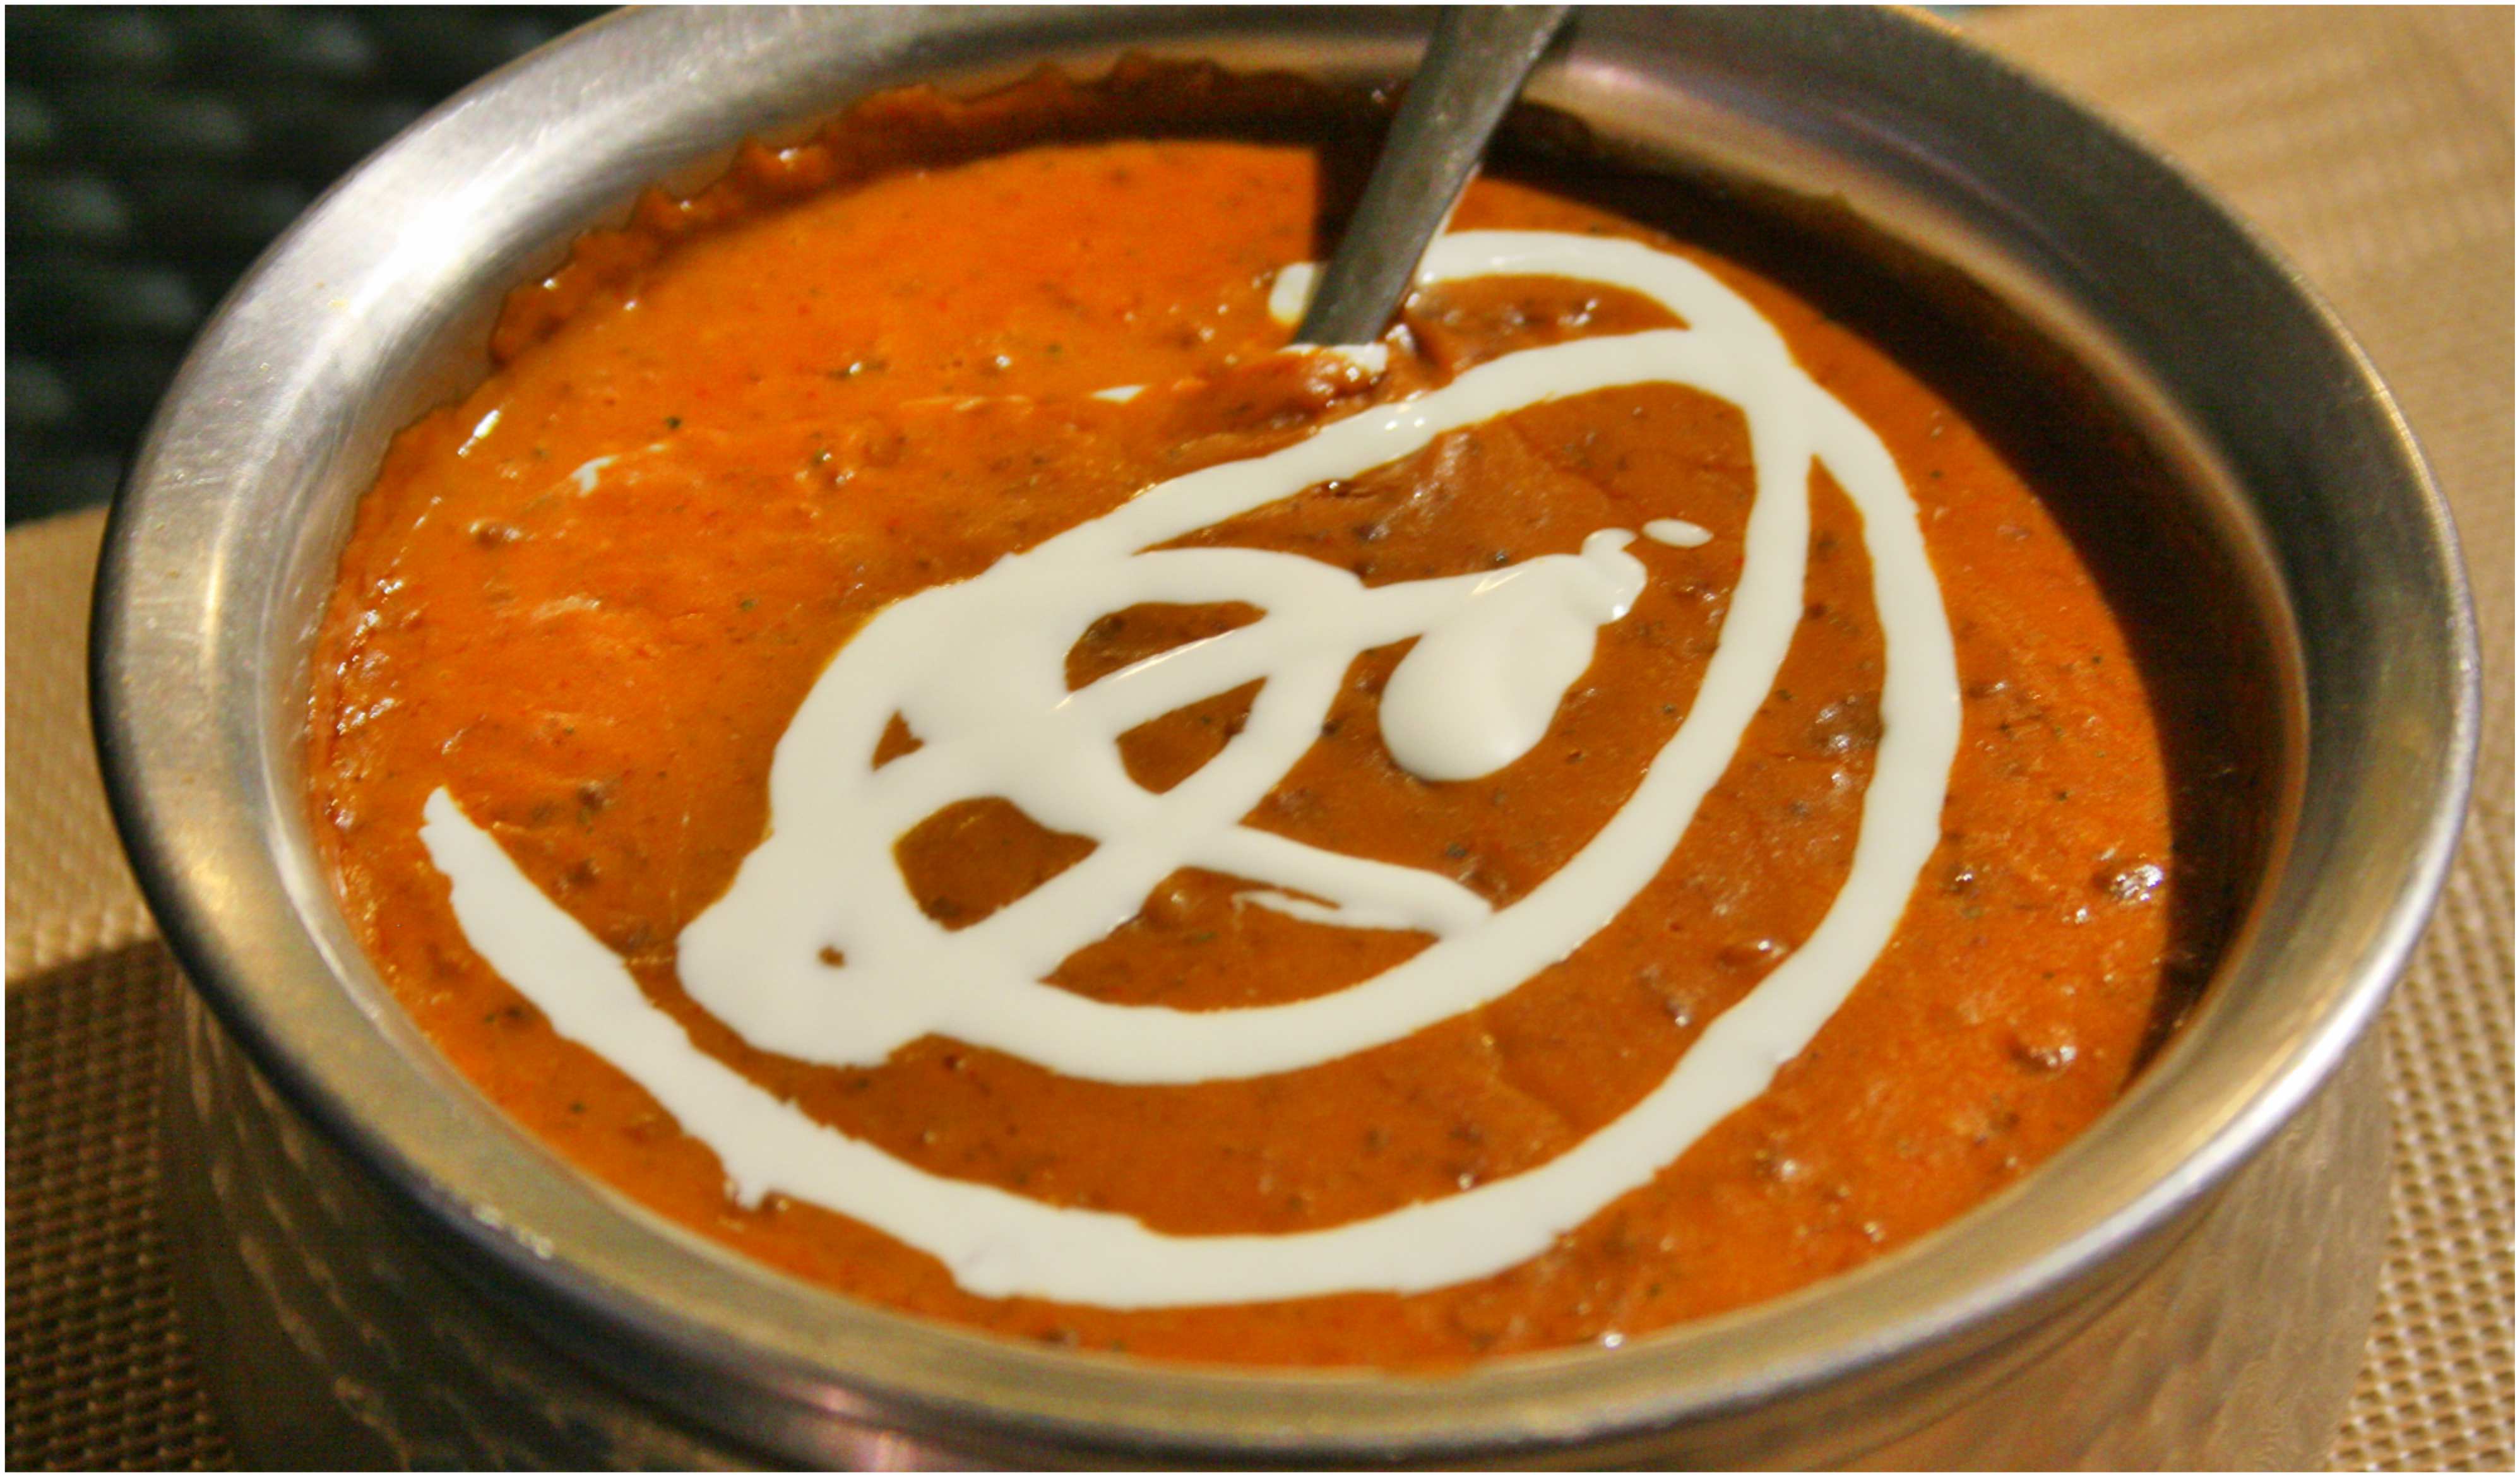 Dal Punjab Grill